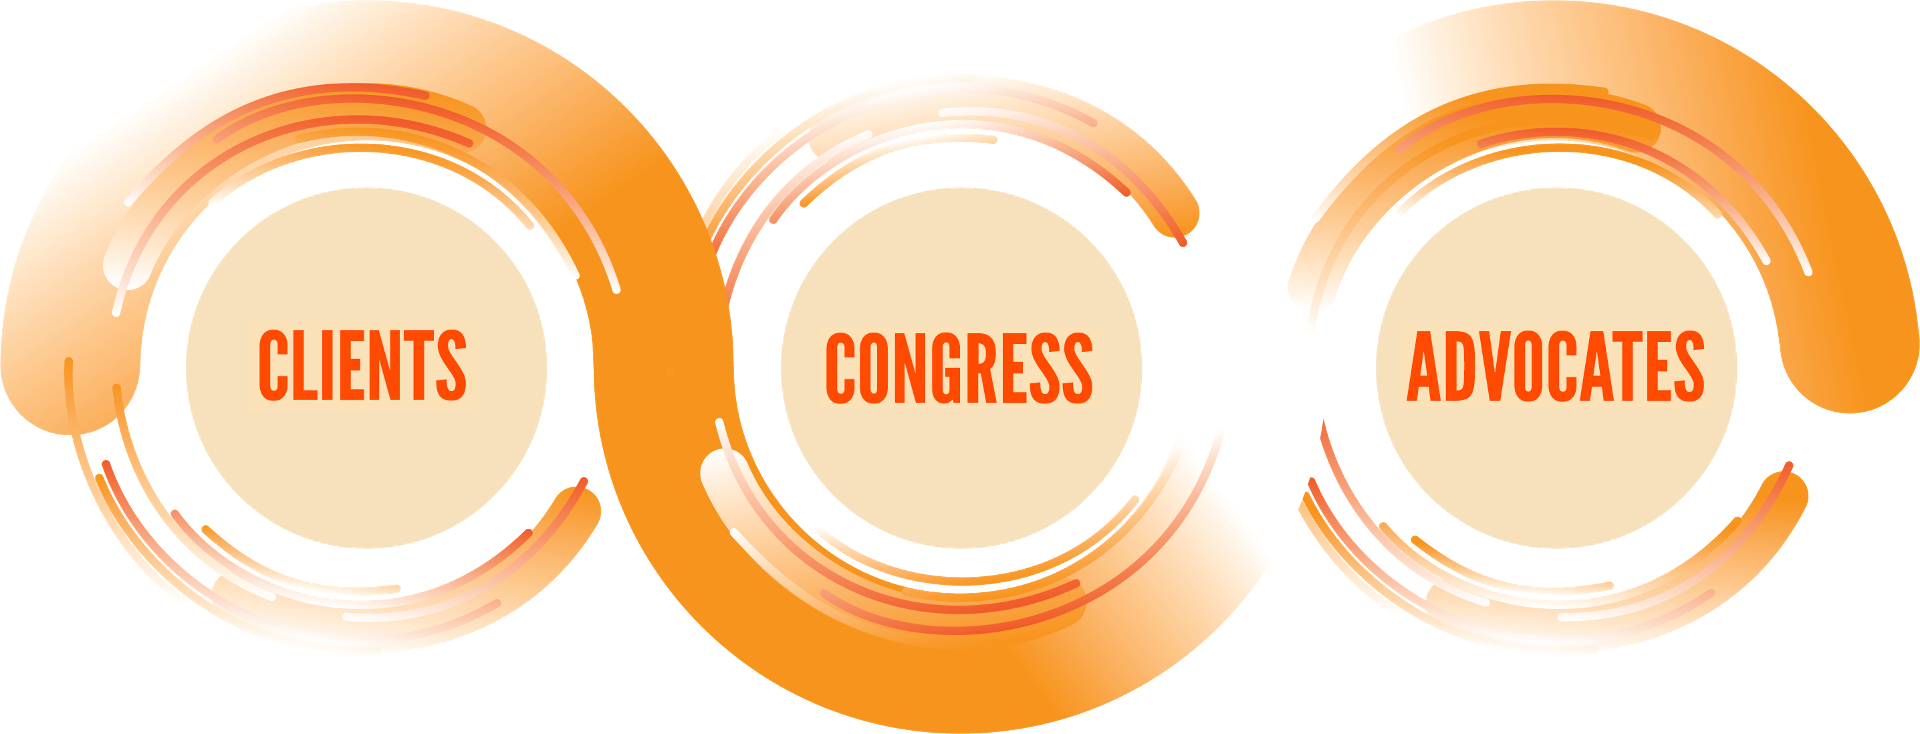 clients, congress, advocates: our three core constituencies